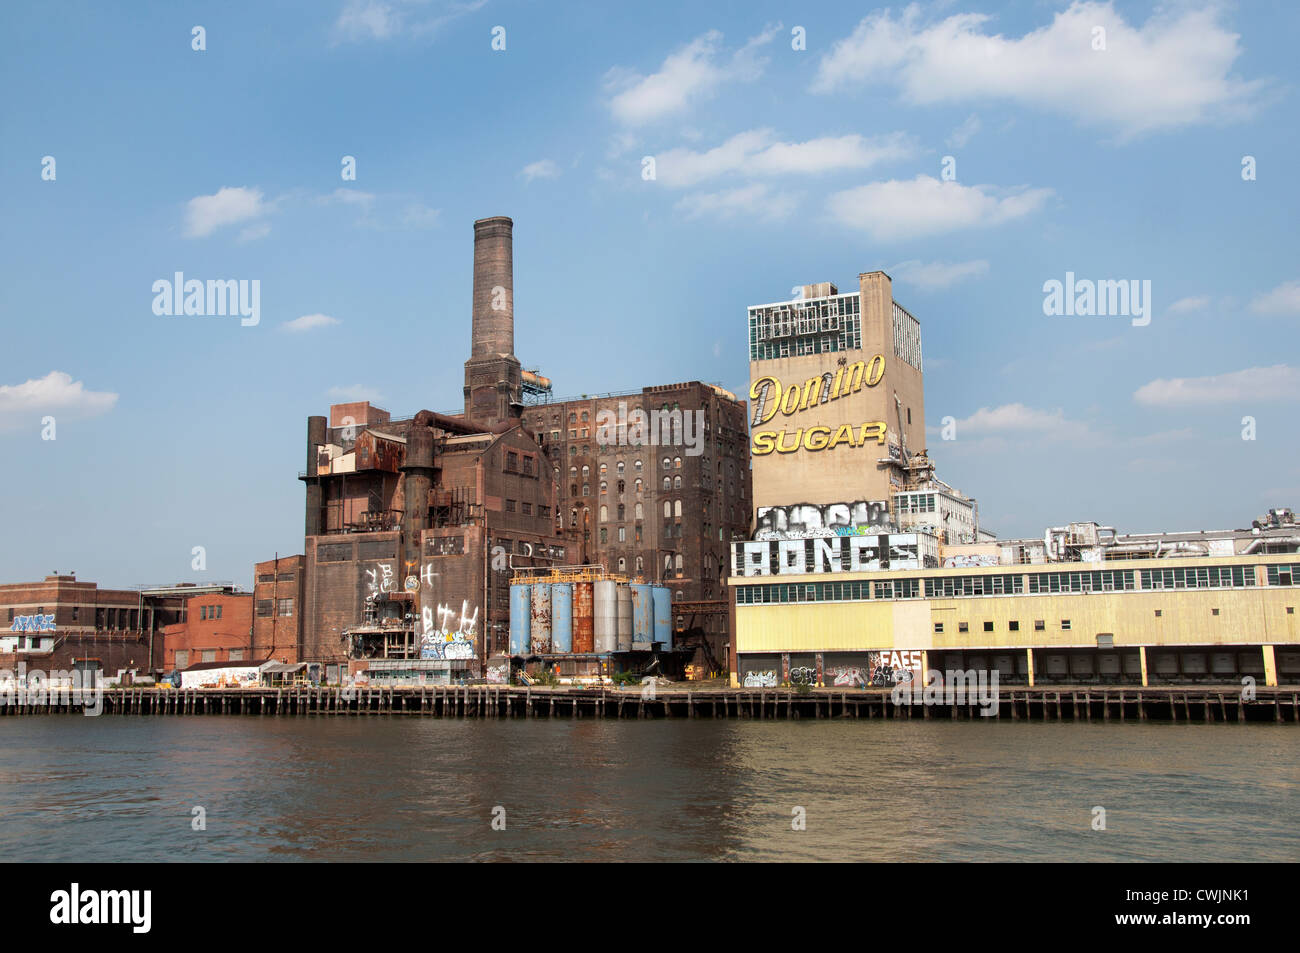 Domino Sugar refinery  Williamsburg Brooklyn New York United States of America Stock Photo